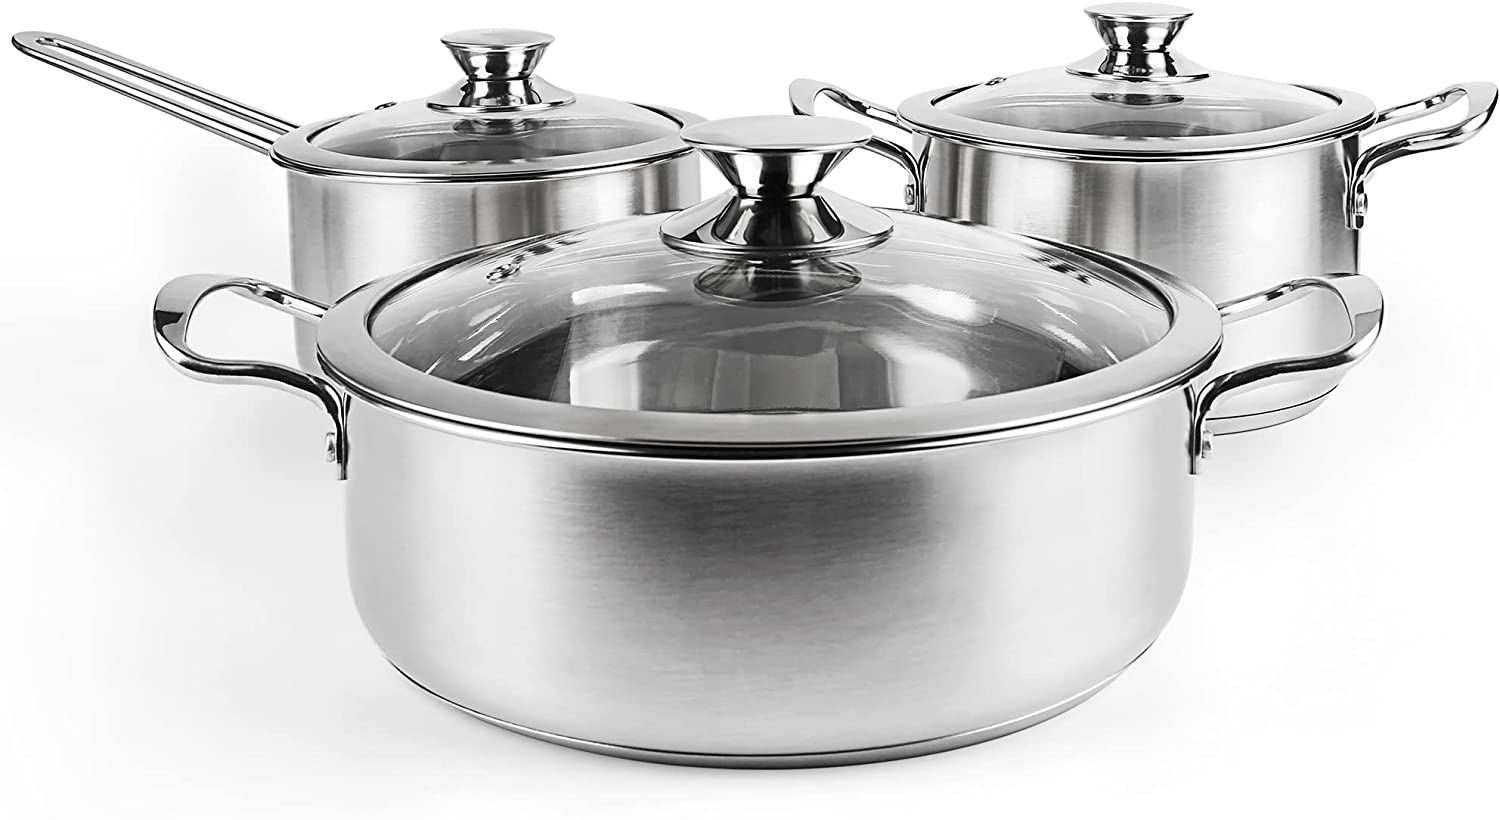 Stainless steel pot set,6 Piece Kitchen Induction [...]